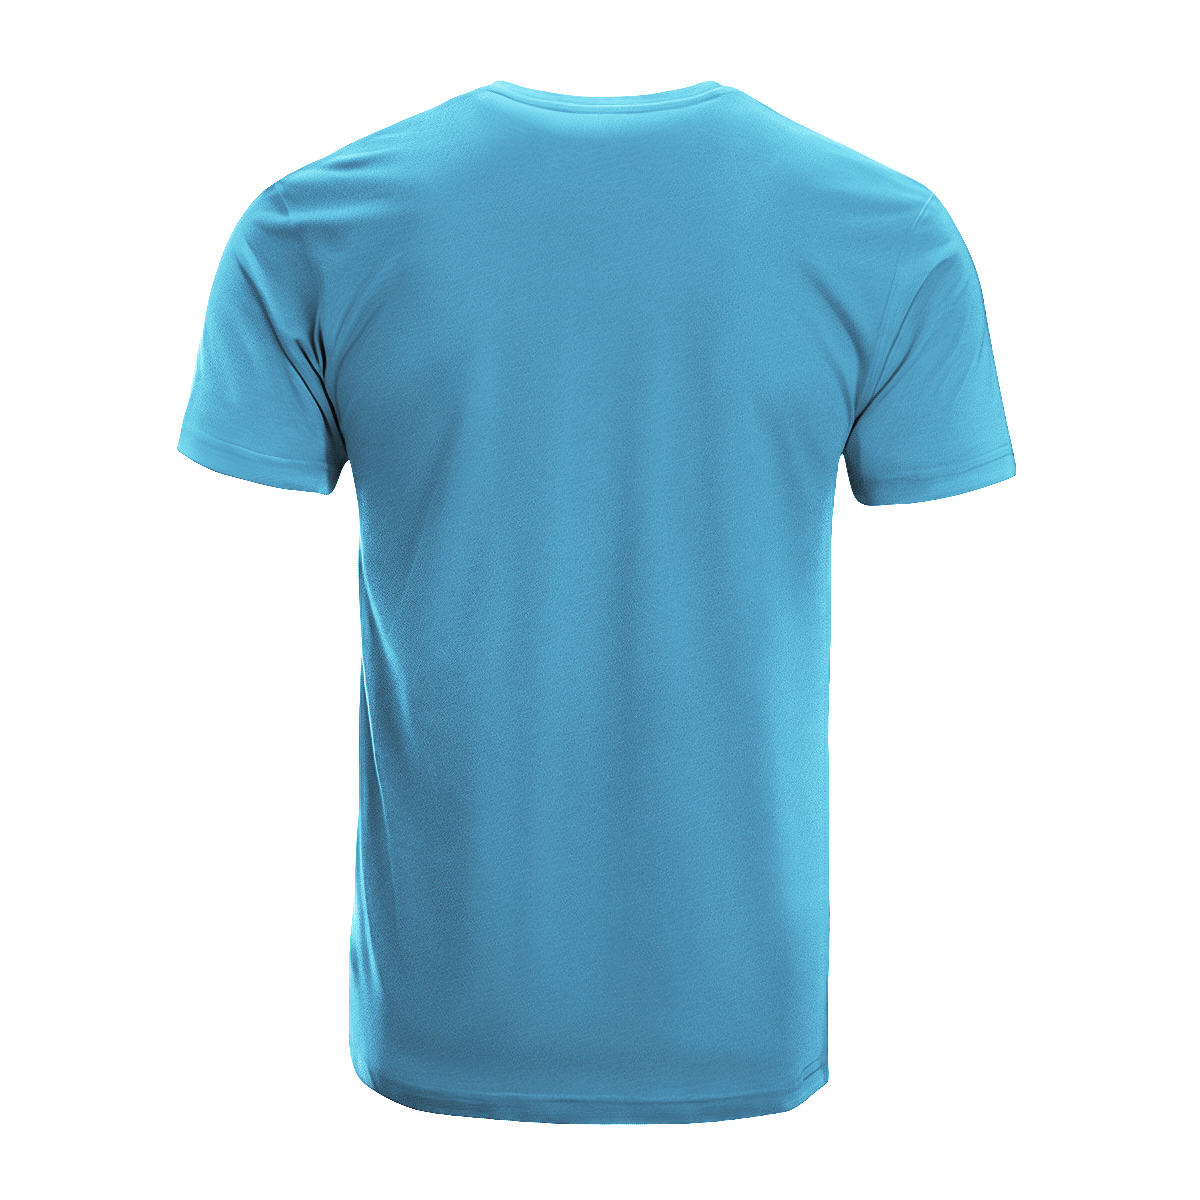 Gillies Tartan Crest T-shirt - I'm not yelling style